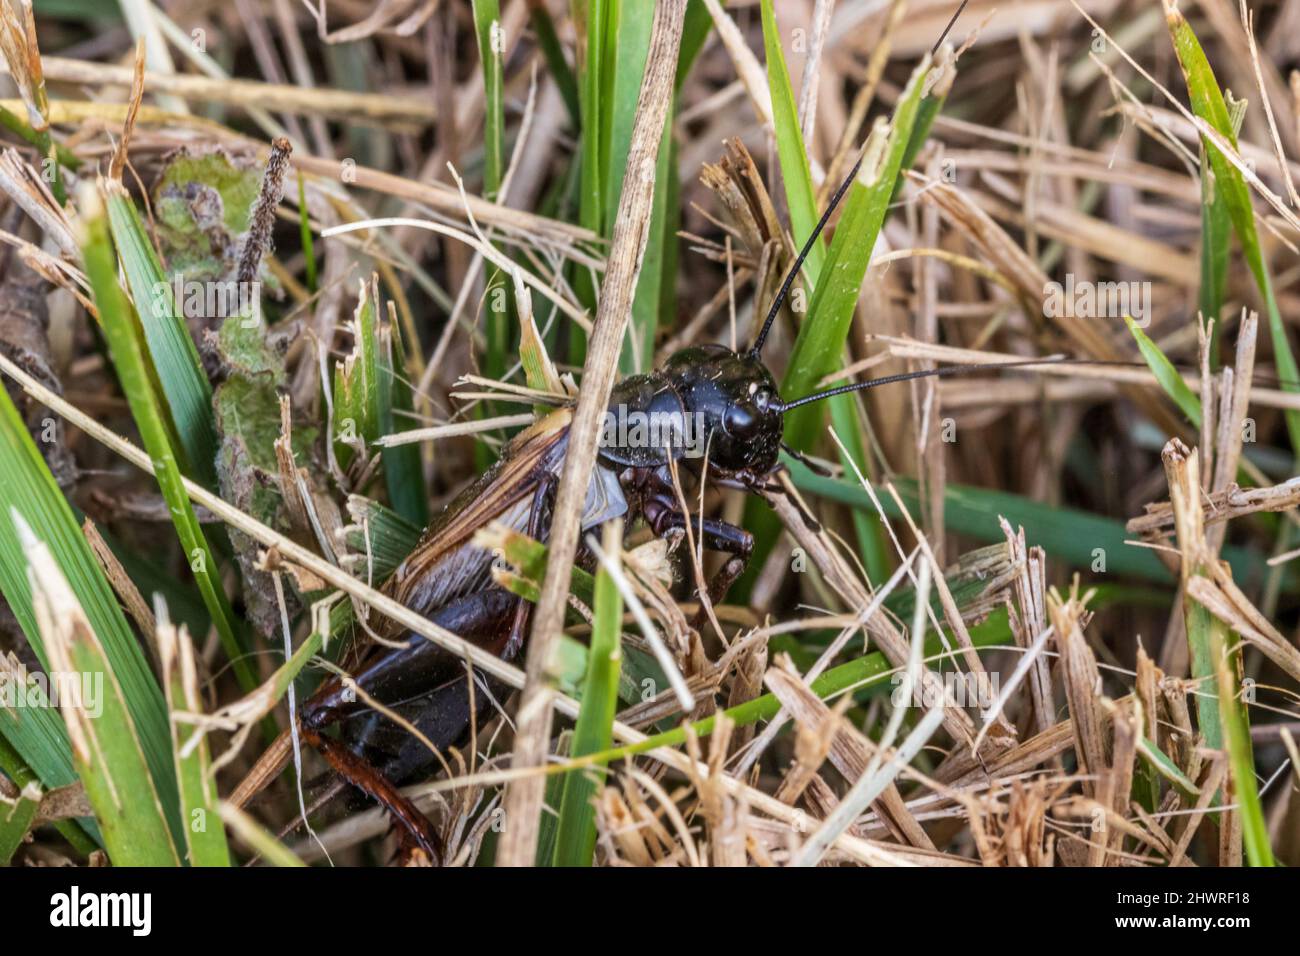 Gryllus bimaculatus, Mediterranean field cricket in Long Grass Stock Photo